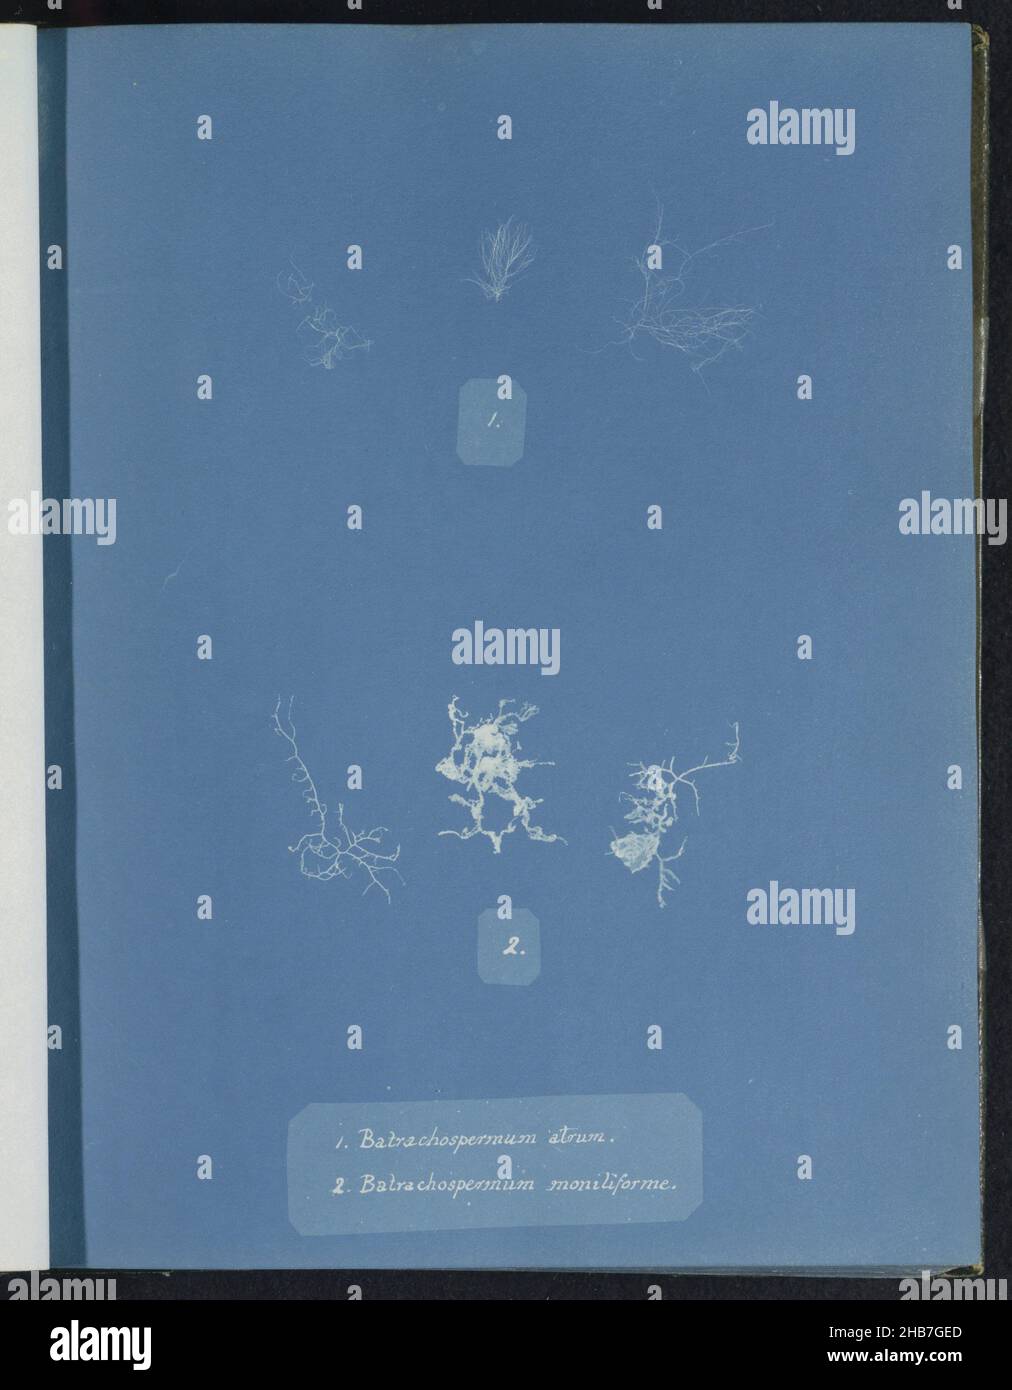 Batrachospermum atrum &amp; Batrachospermum moniliforme, Anna Atkins, United Kingdom, c. 1843 - c. 1853, photographic support, cyanotype, height 250 mm × width 200 mm Stock Photo